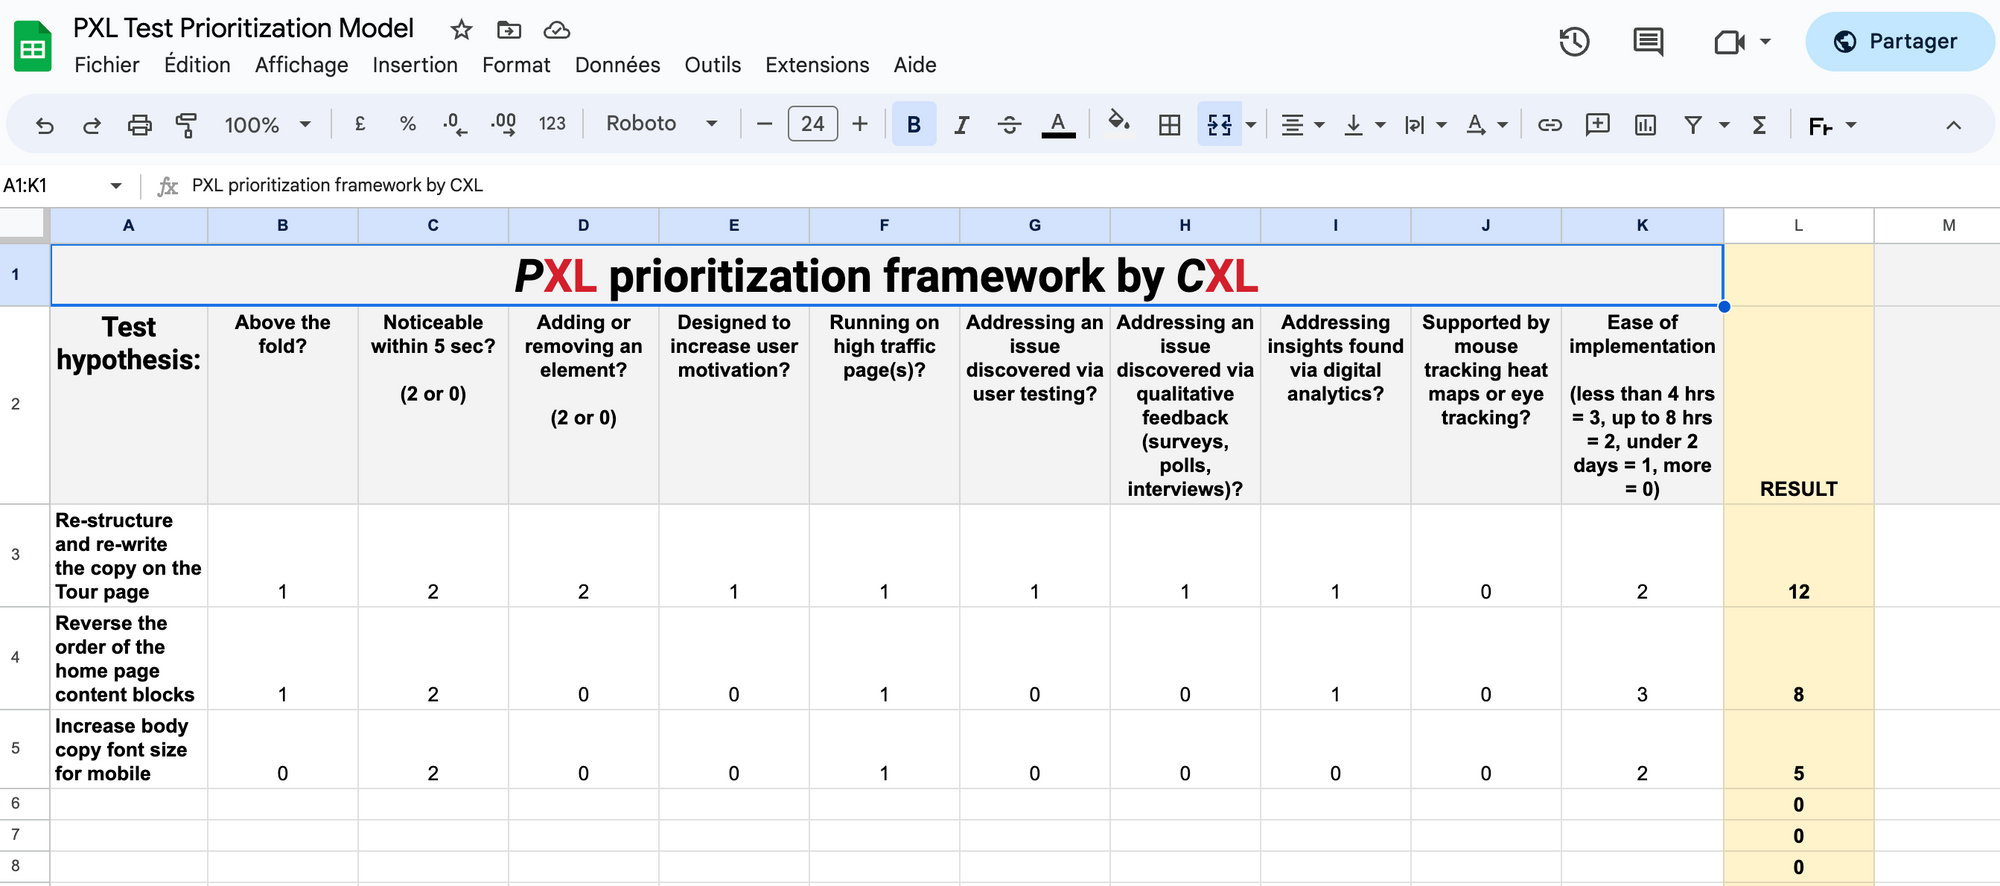 PXL prioritization framework by CXL